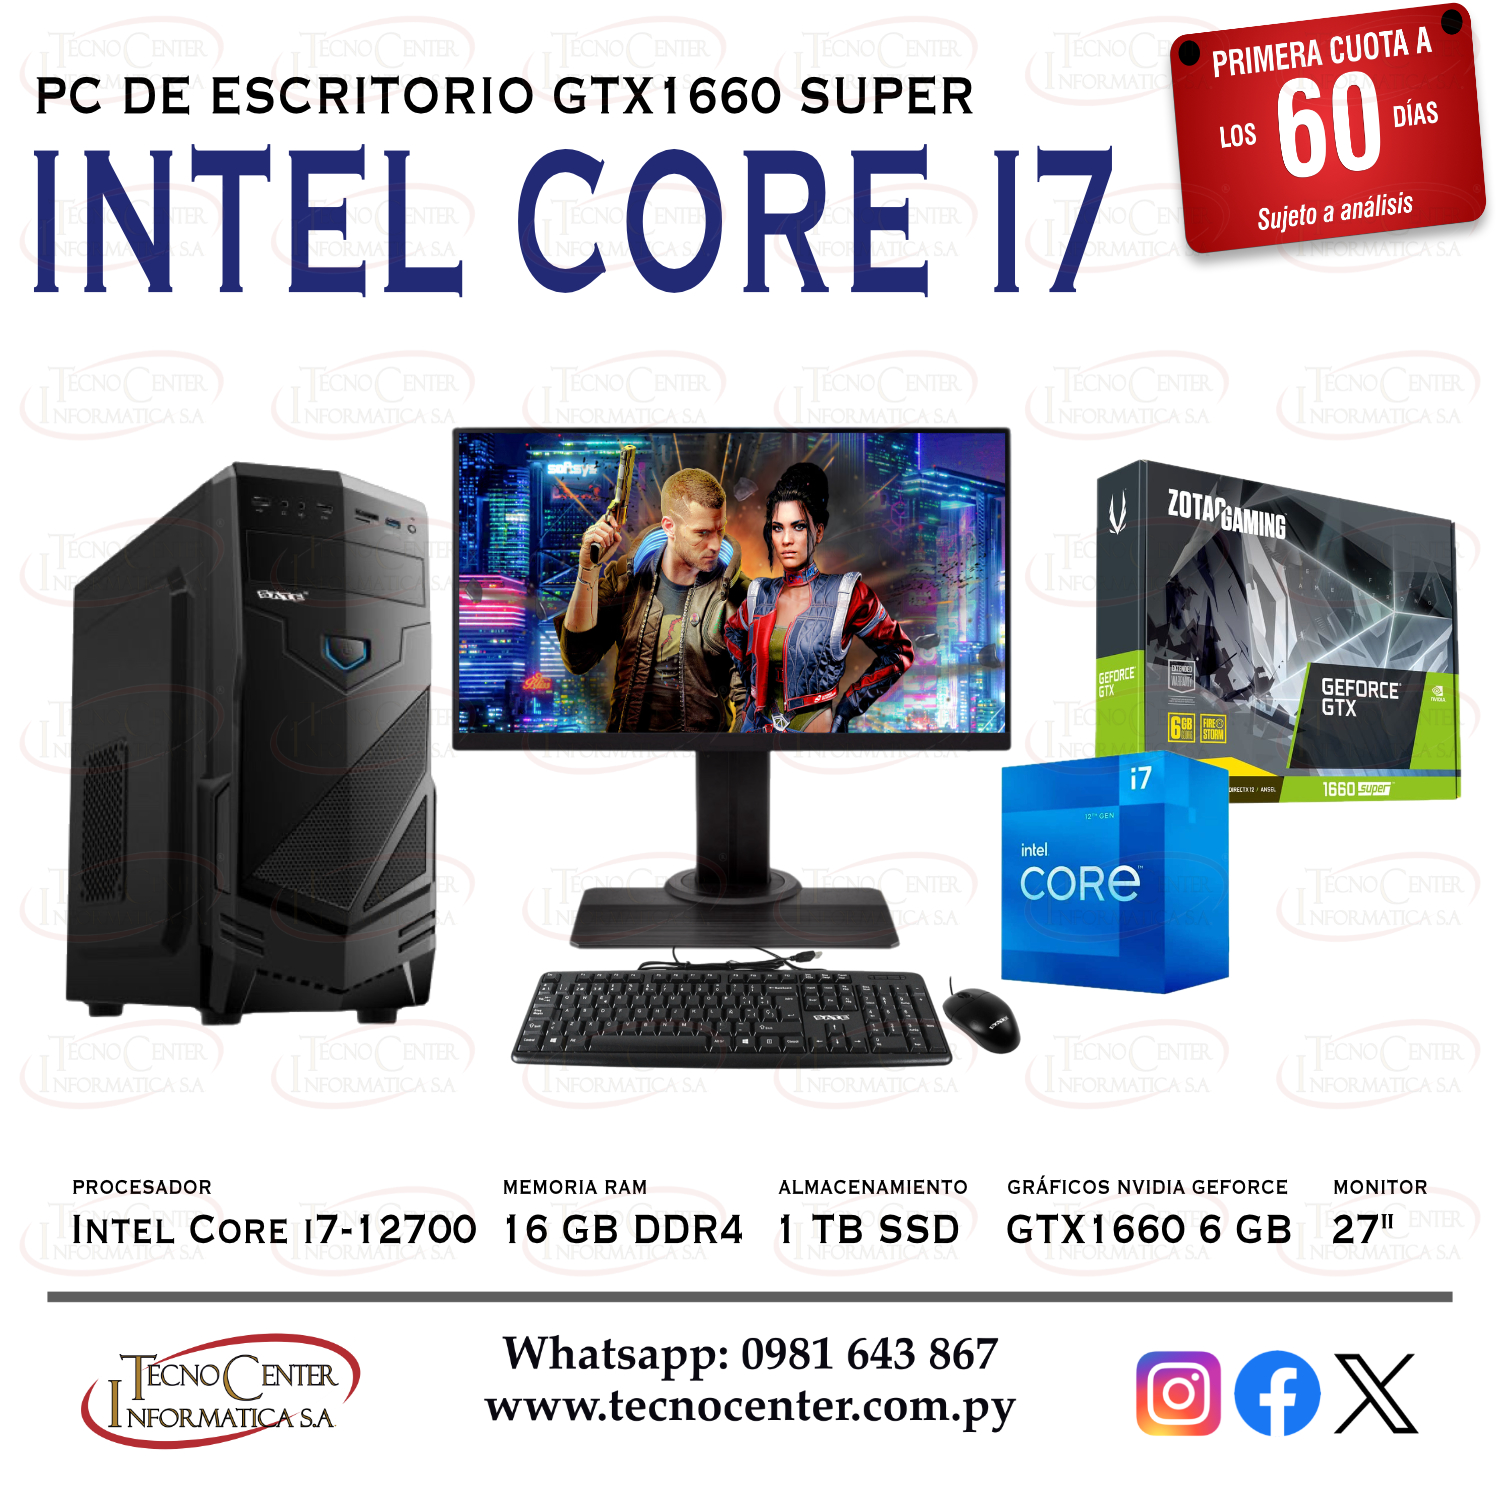 PC de Escritorio GTX1660 Intel Core i7